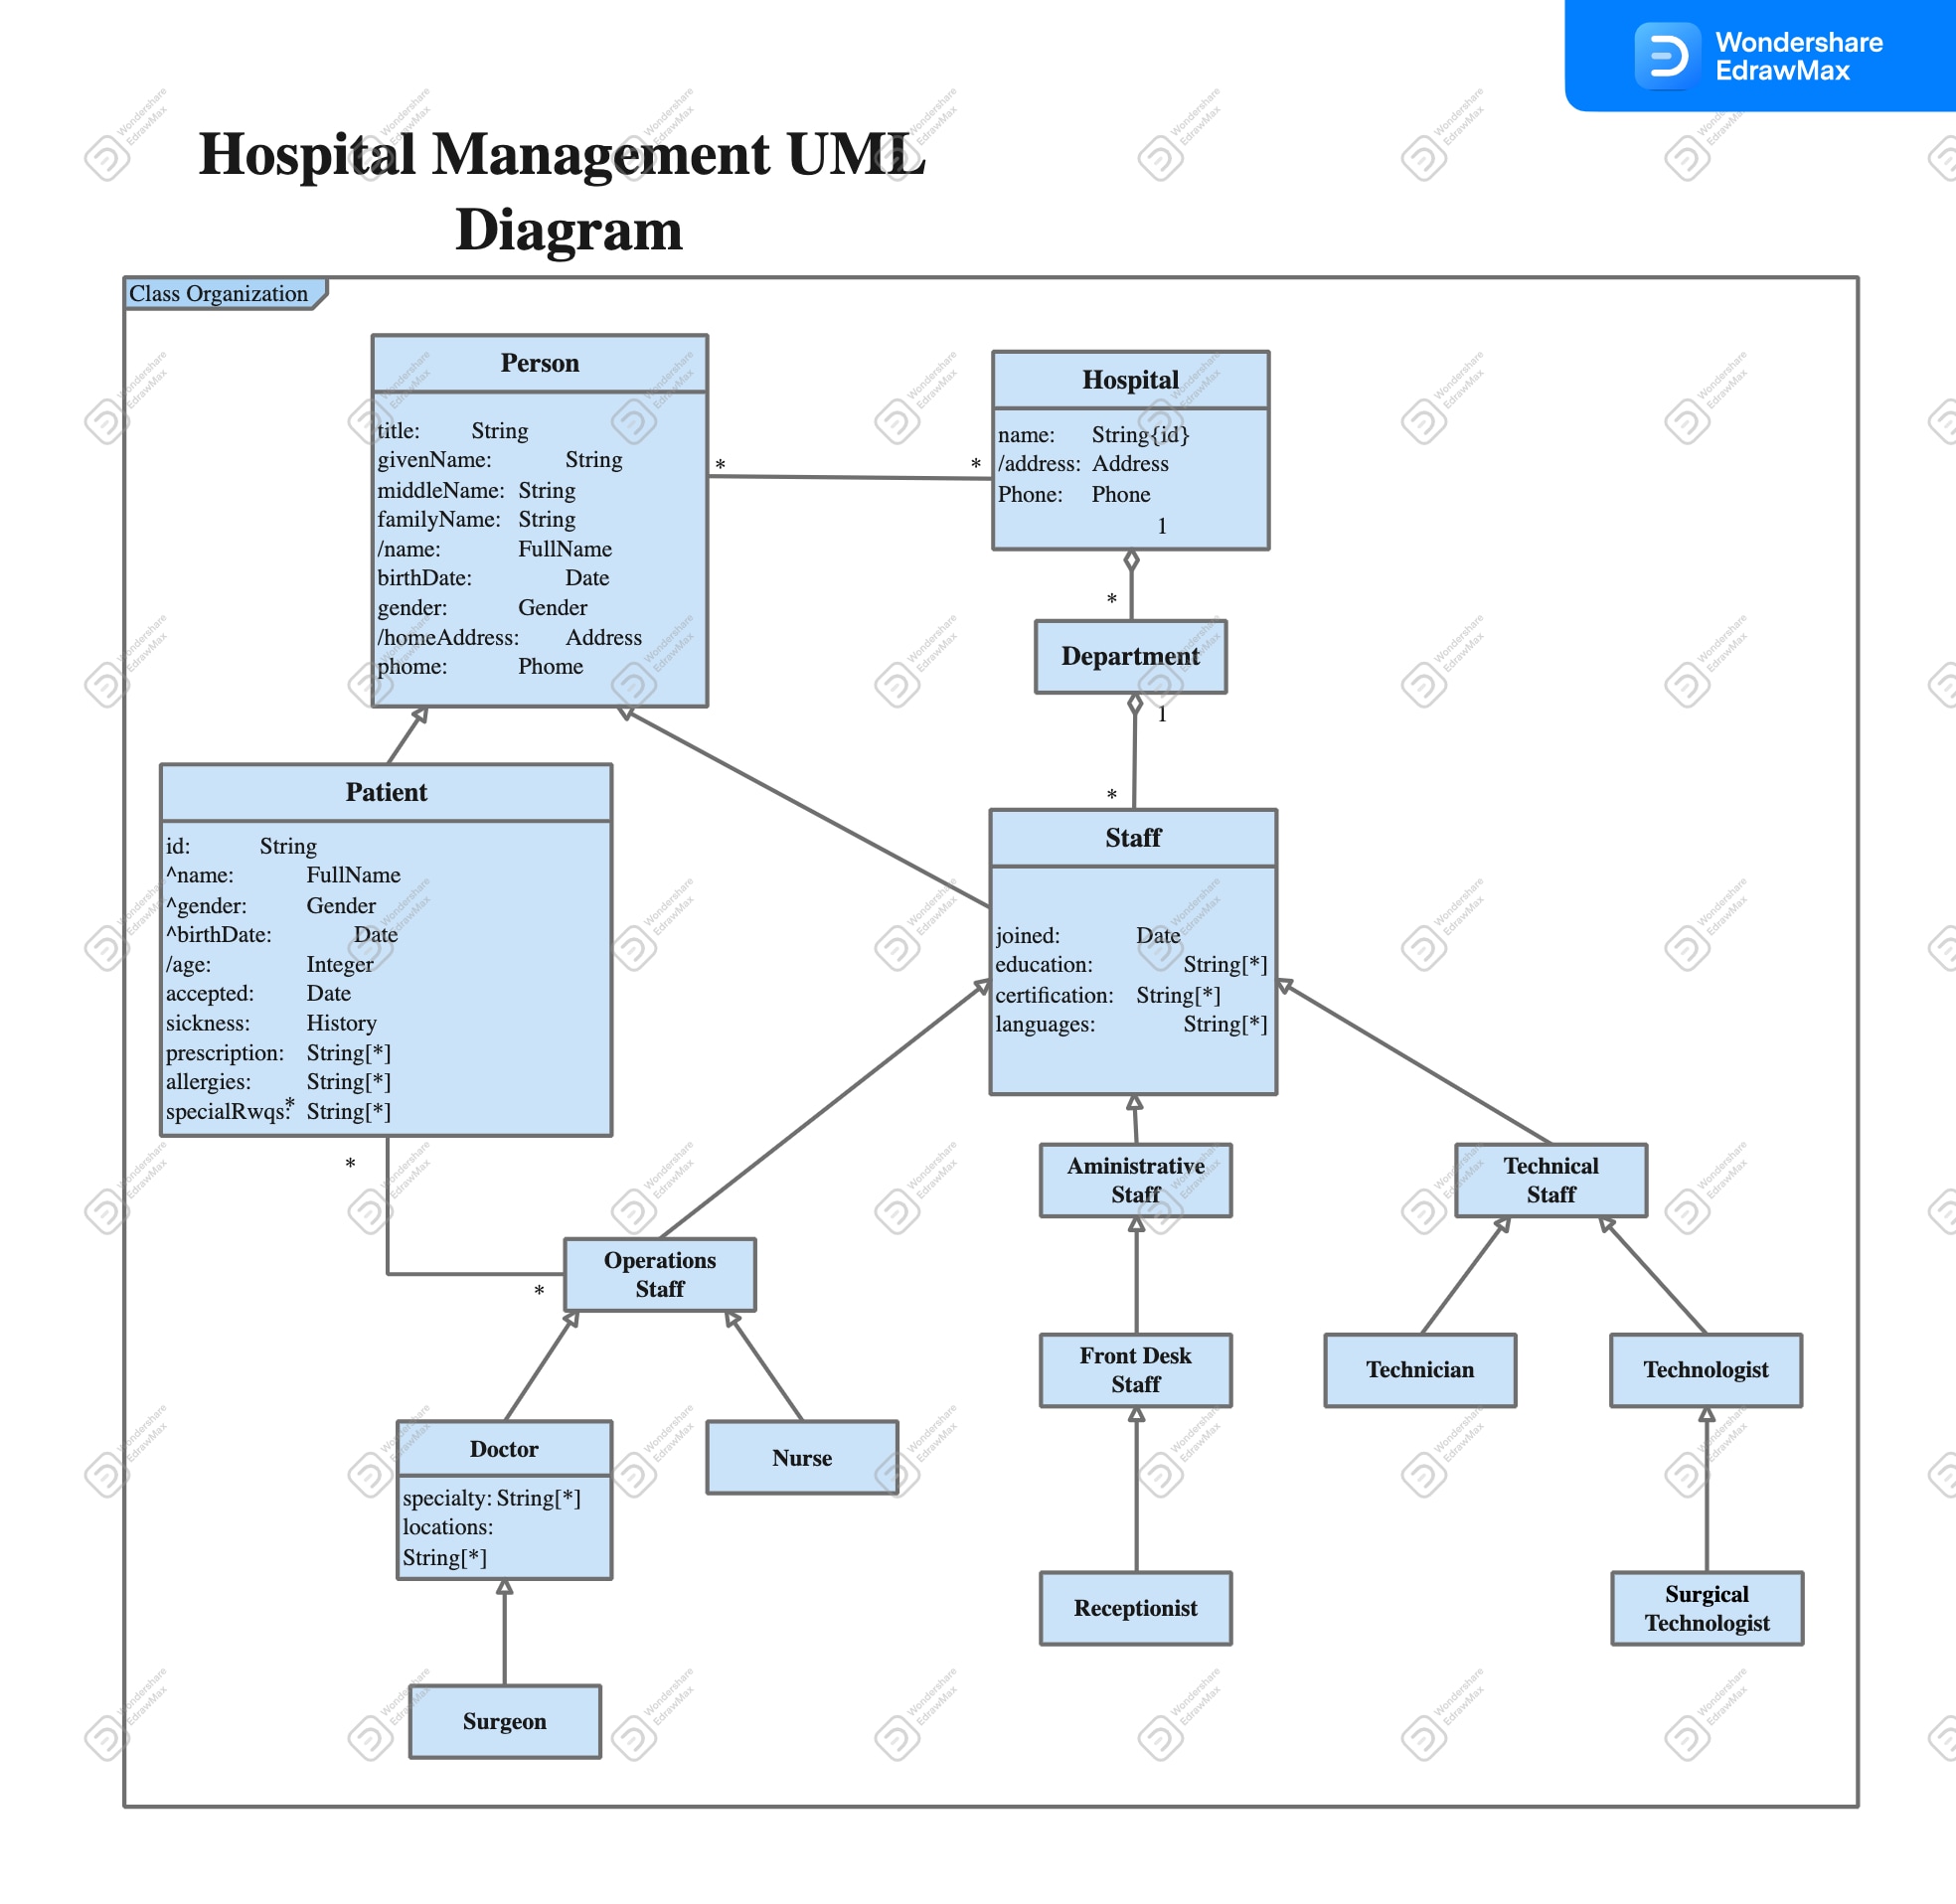 Hospital Management UML Diagram